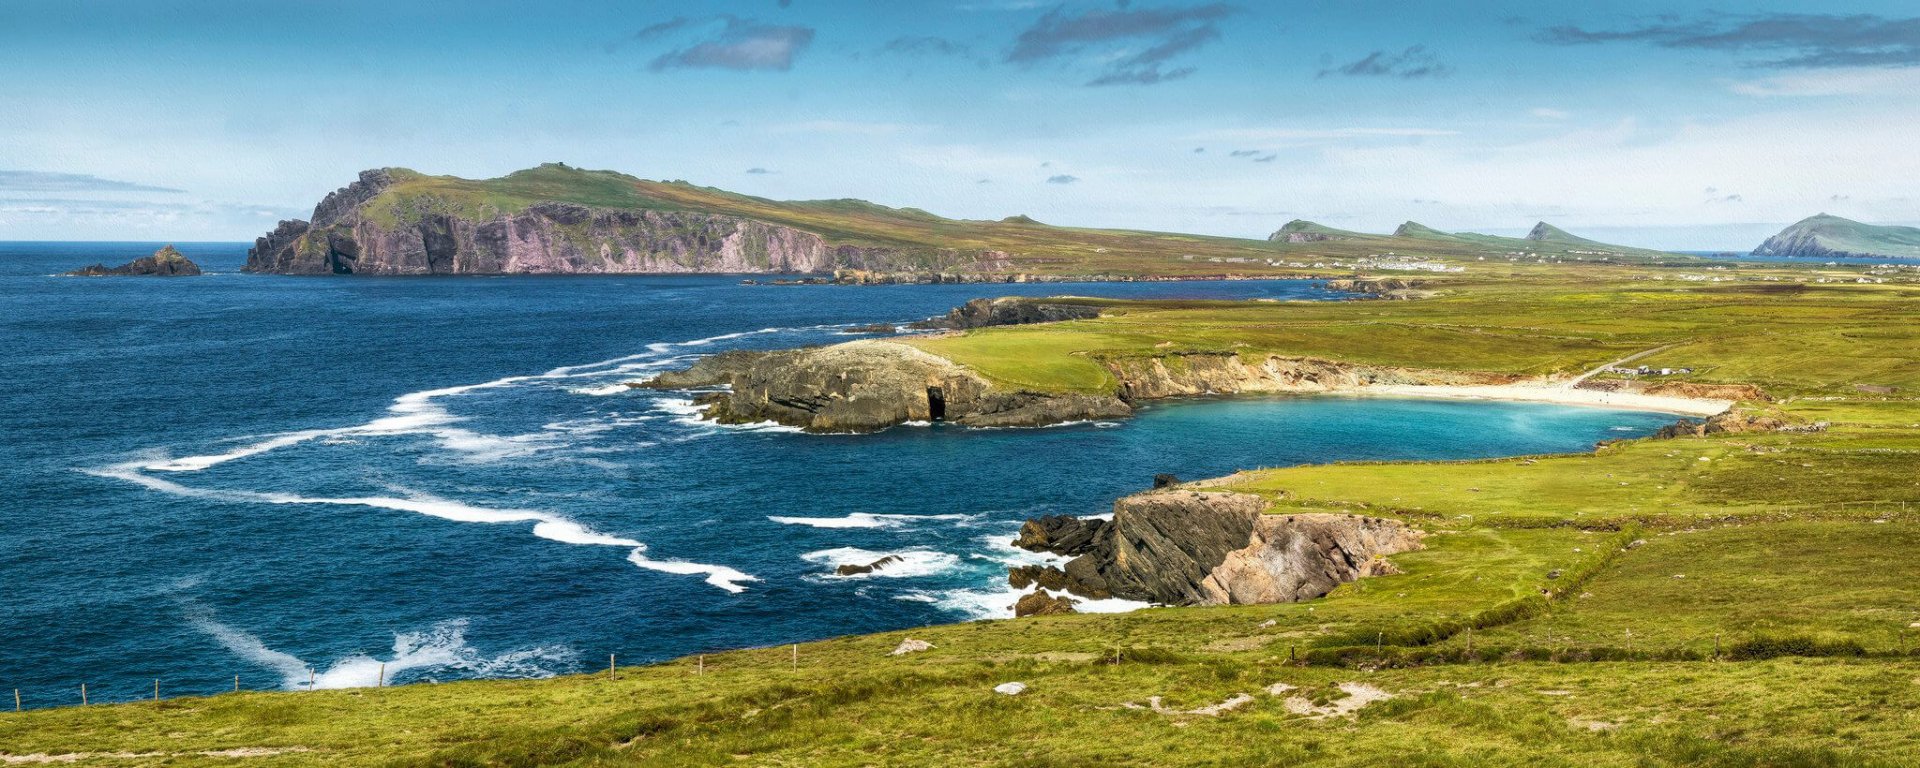 Slea Head on the Dingle Peninsula in Ireland